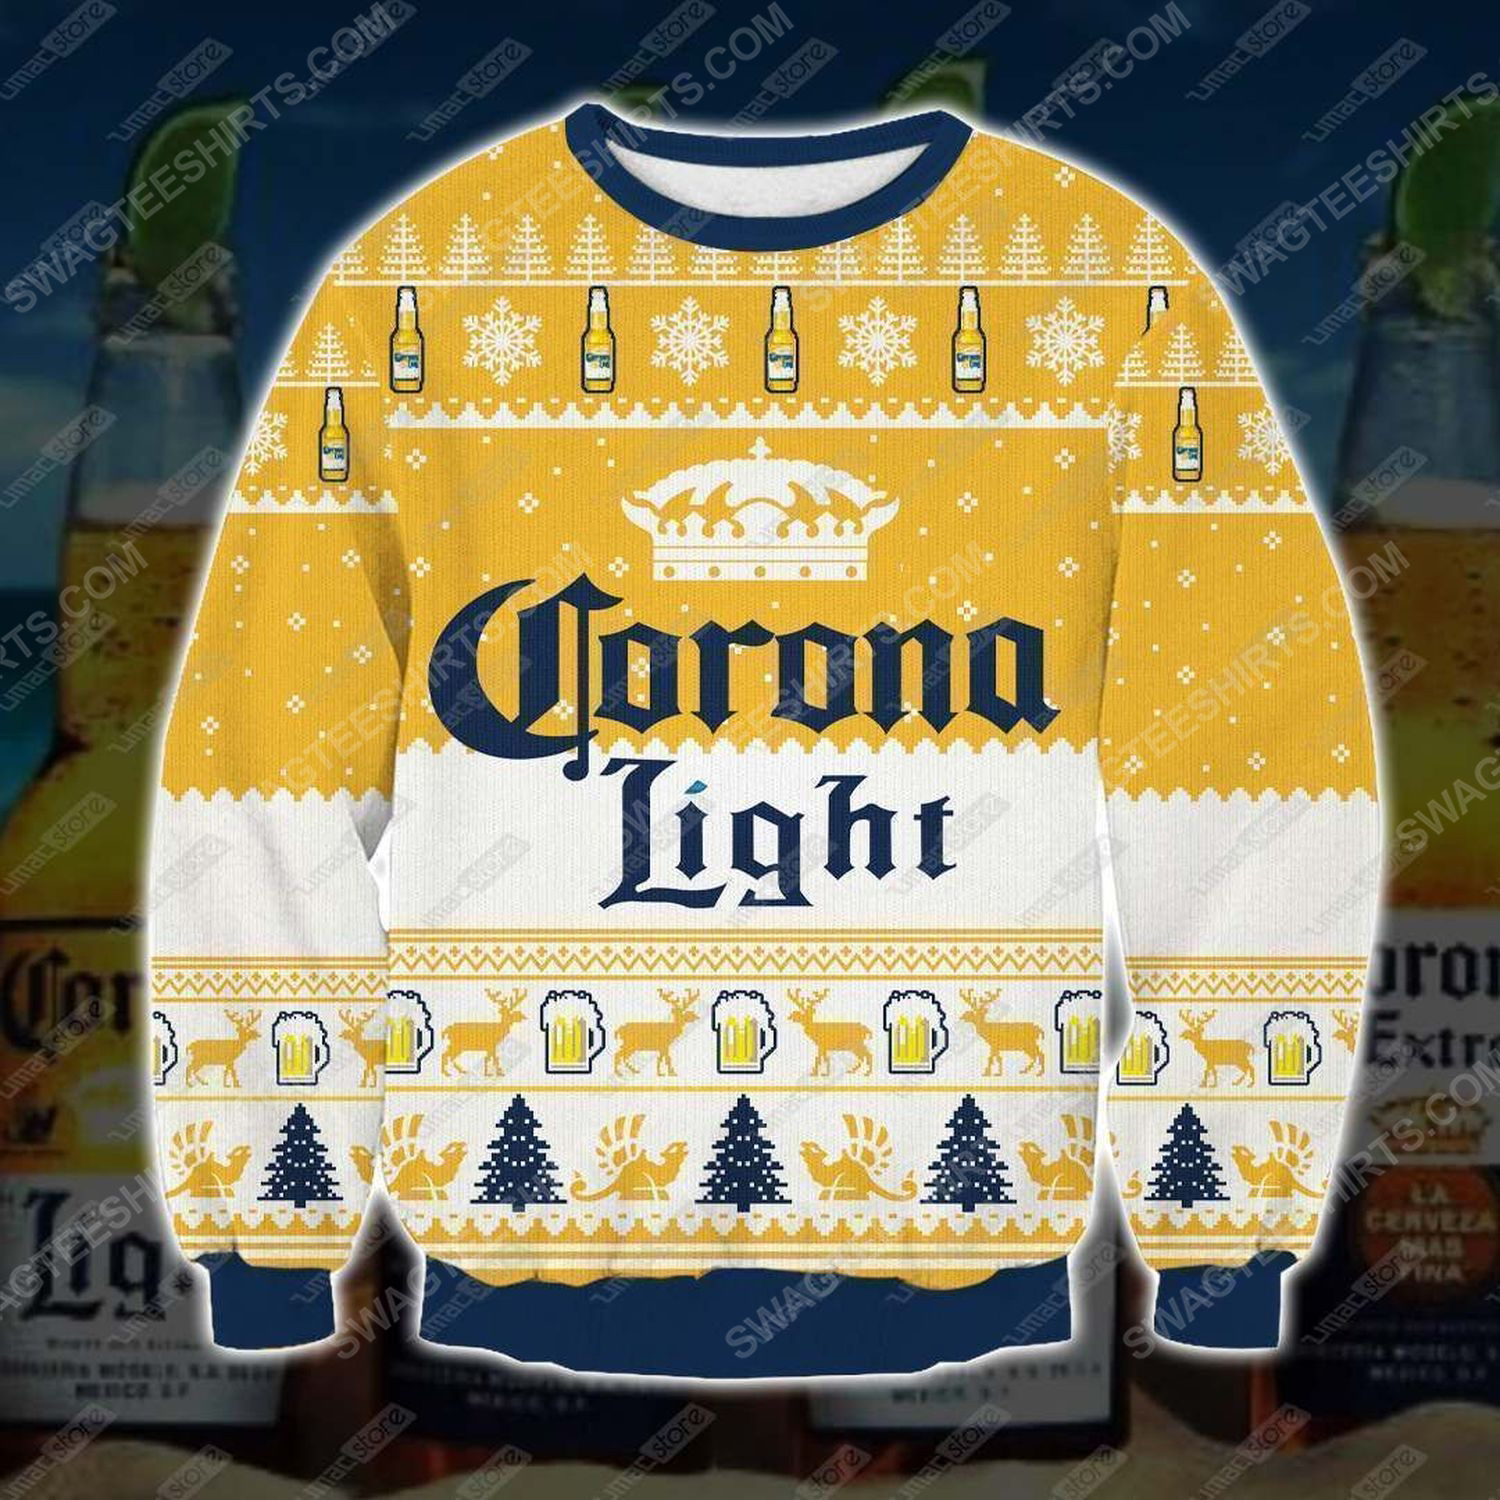 Corona light beer ugly christmas sweater - Copy (2)